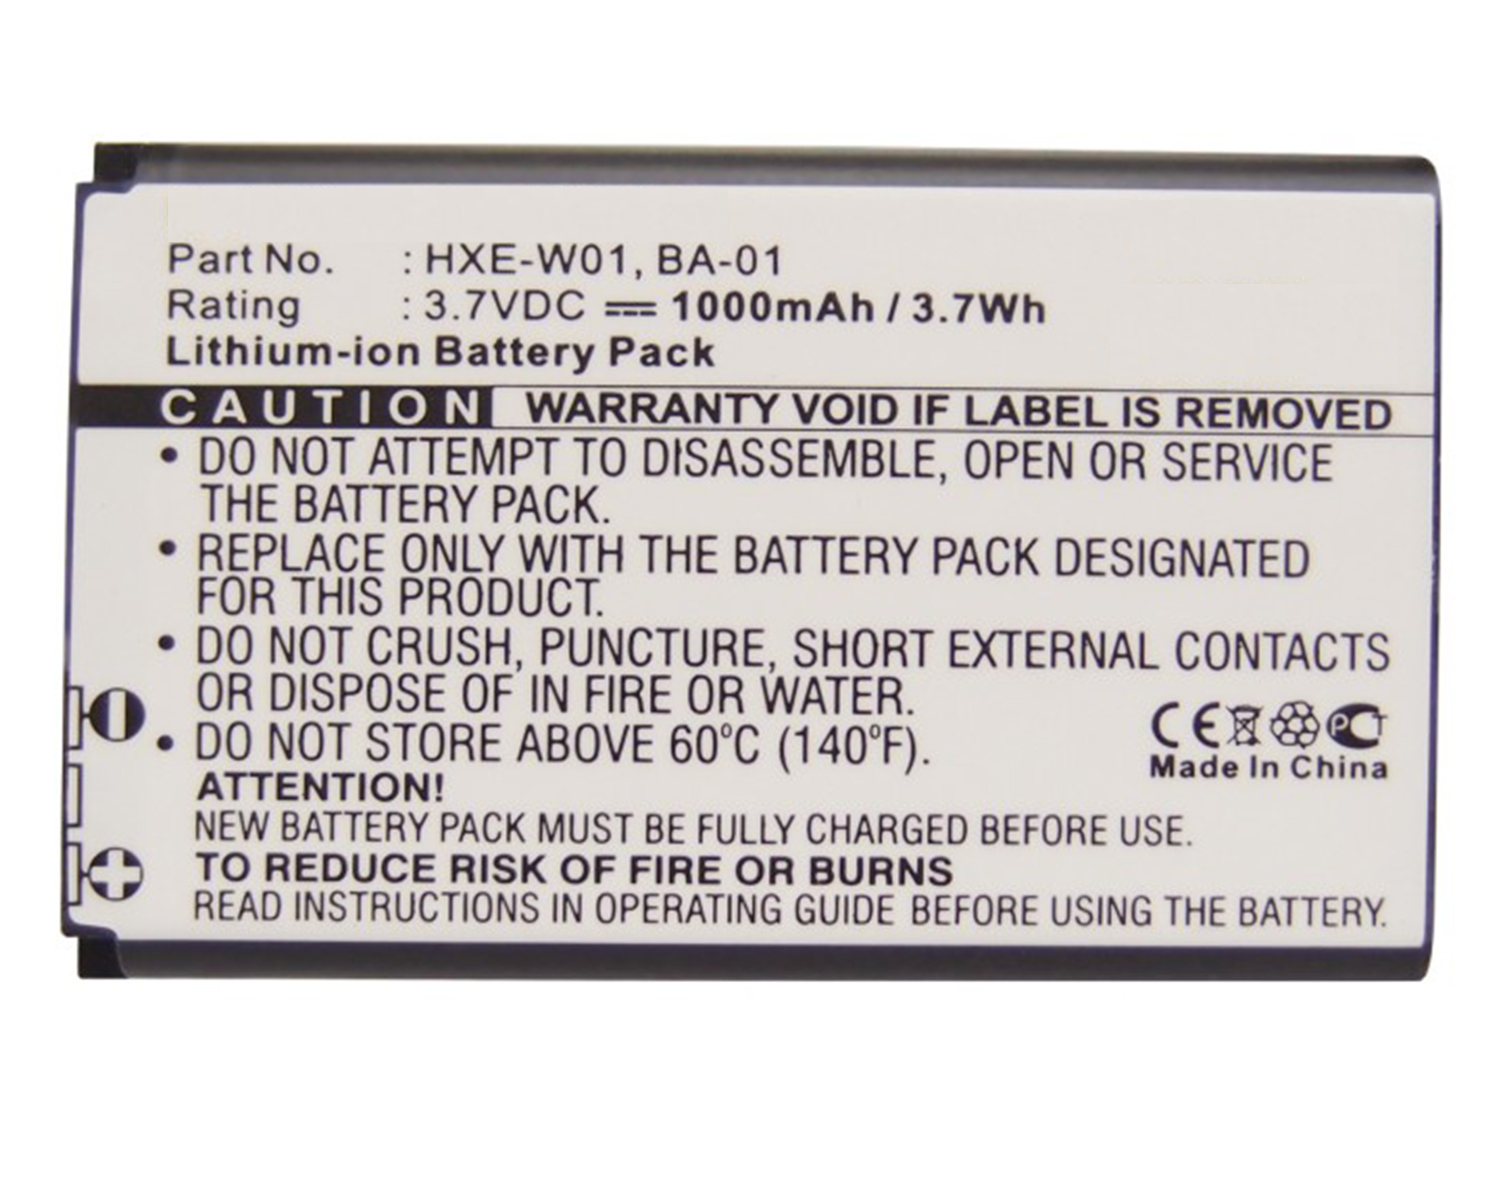 Batteries for HoluxGPS